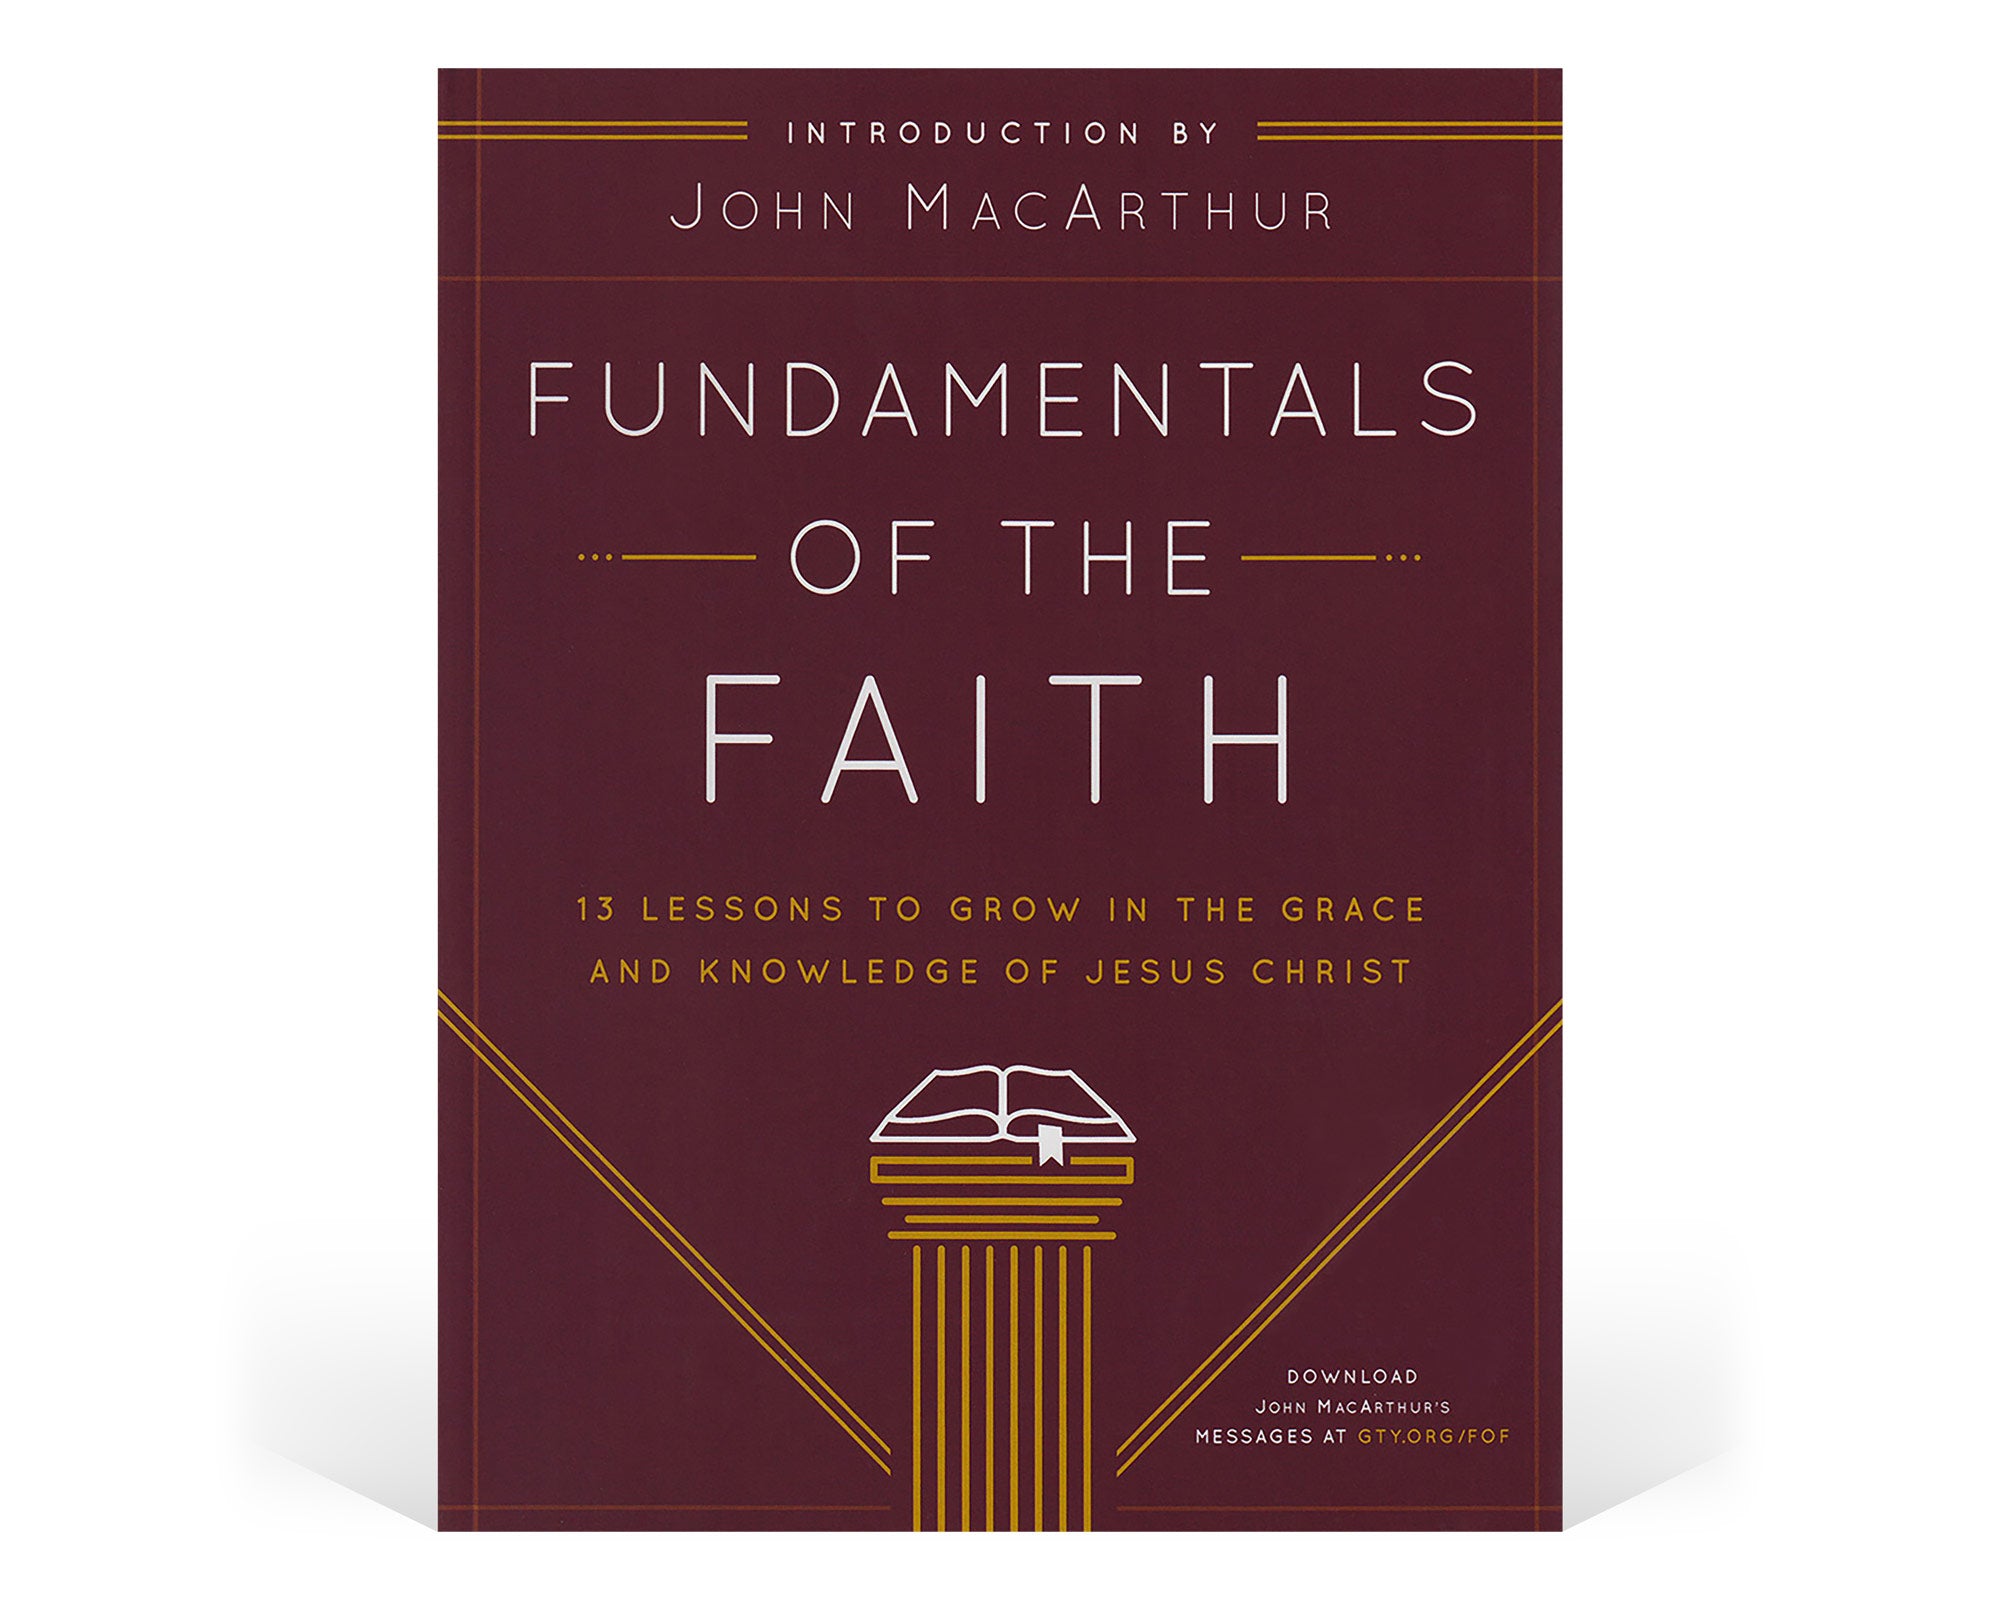 Fundamentals of the Faith